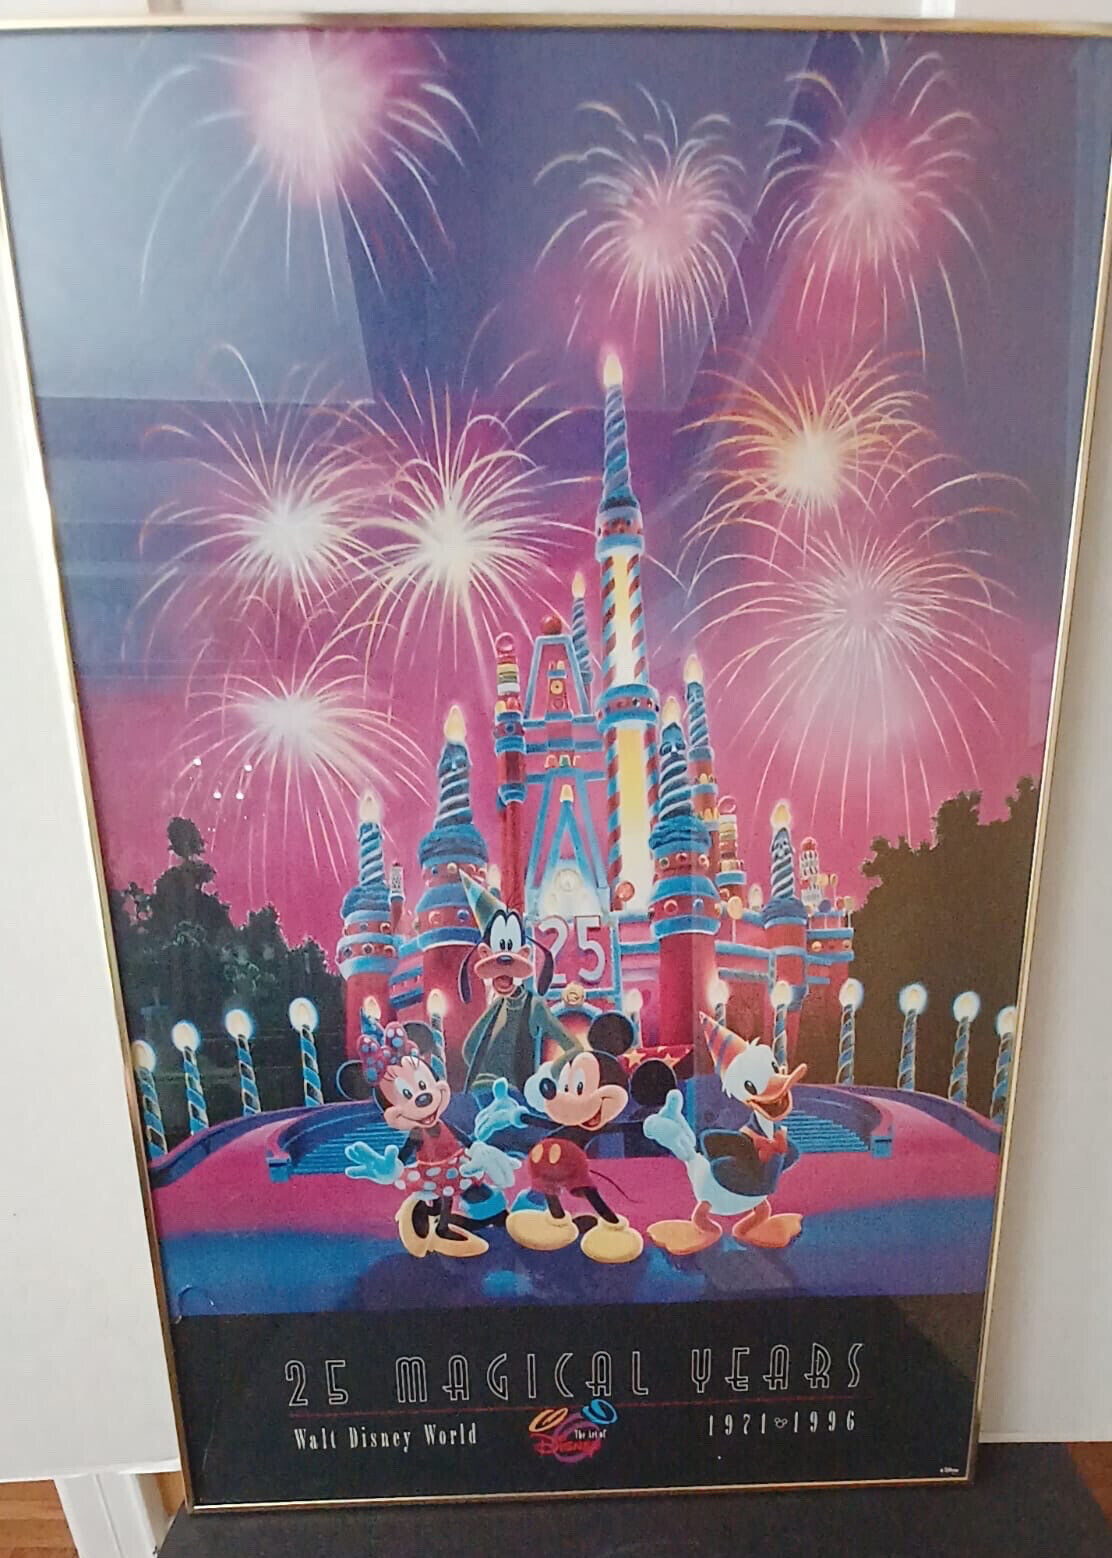 Walt Disney World Magic Kingdom 25 magical years framed poster 1971 - 1996